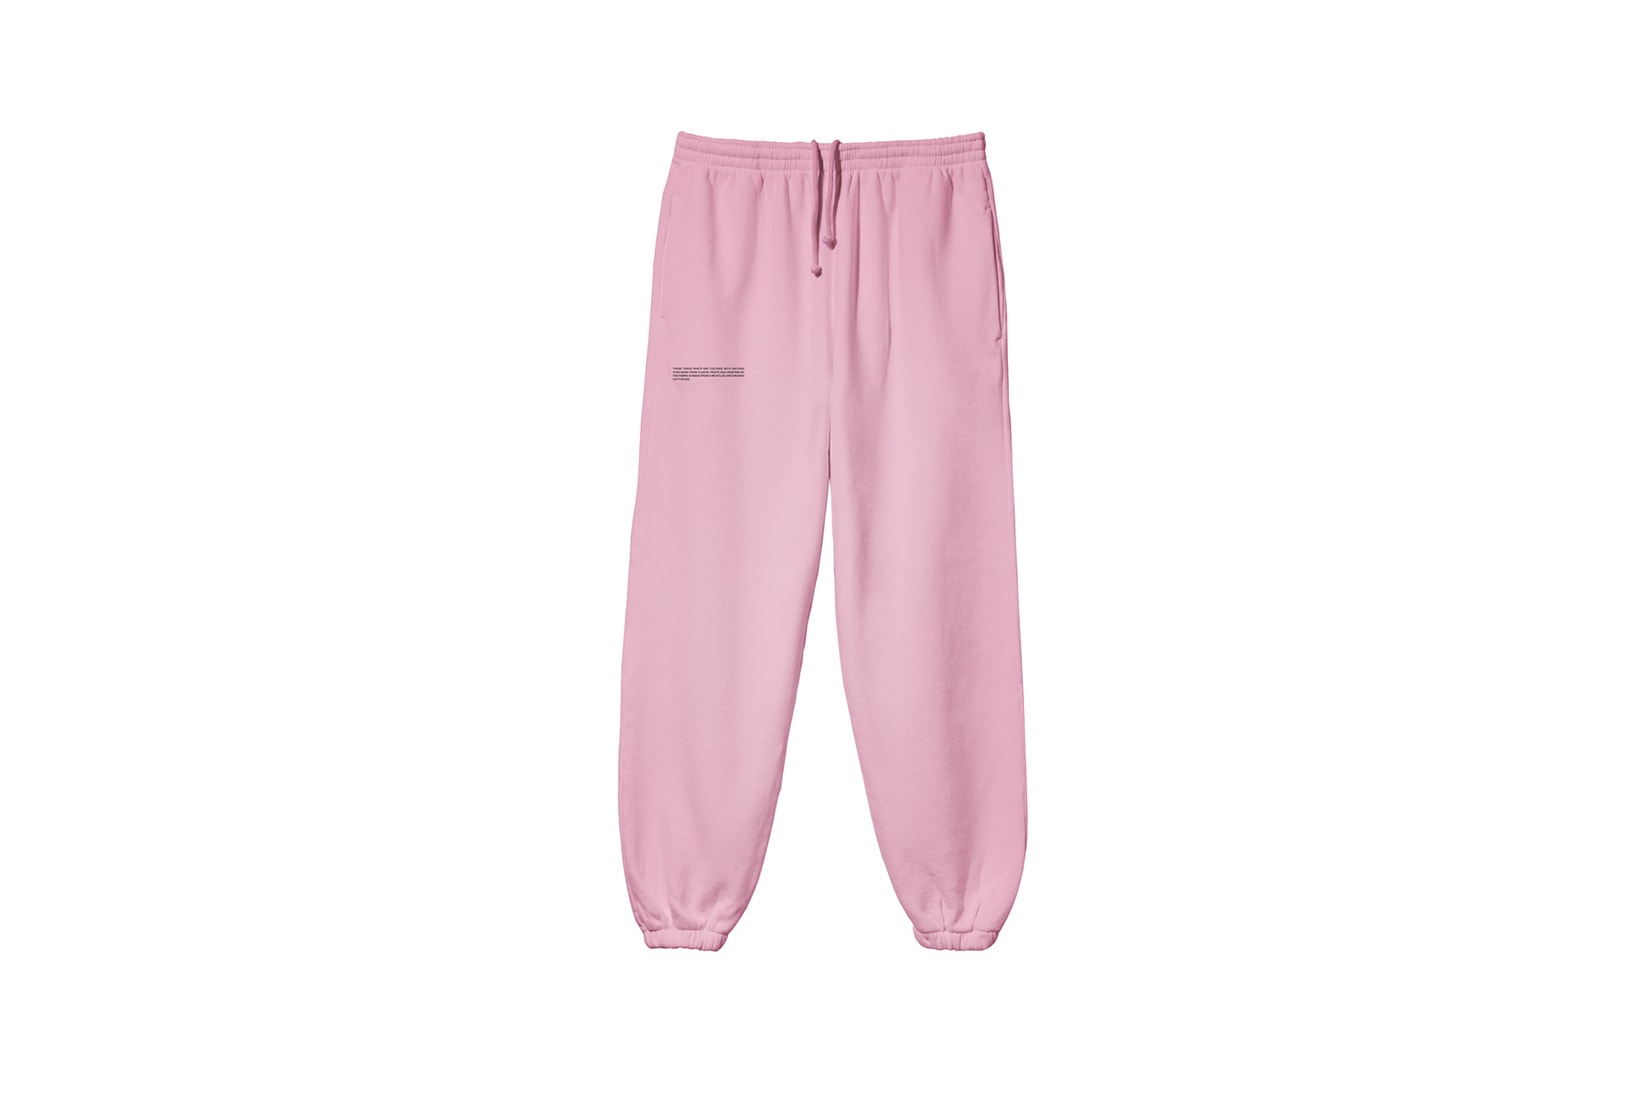 pangaia botanical collection tracksuits hoodies track pants loungewear sustainability natural dye pink green